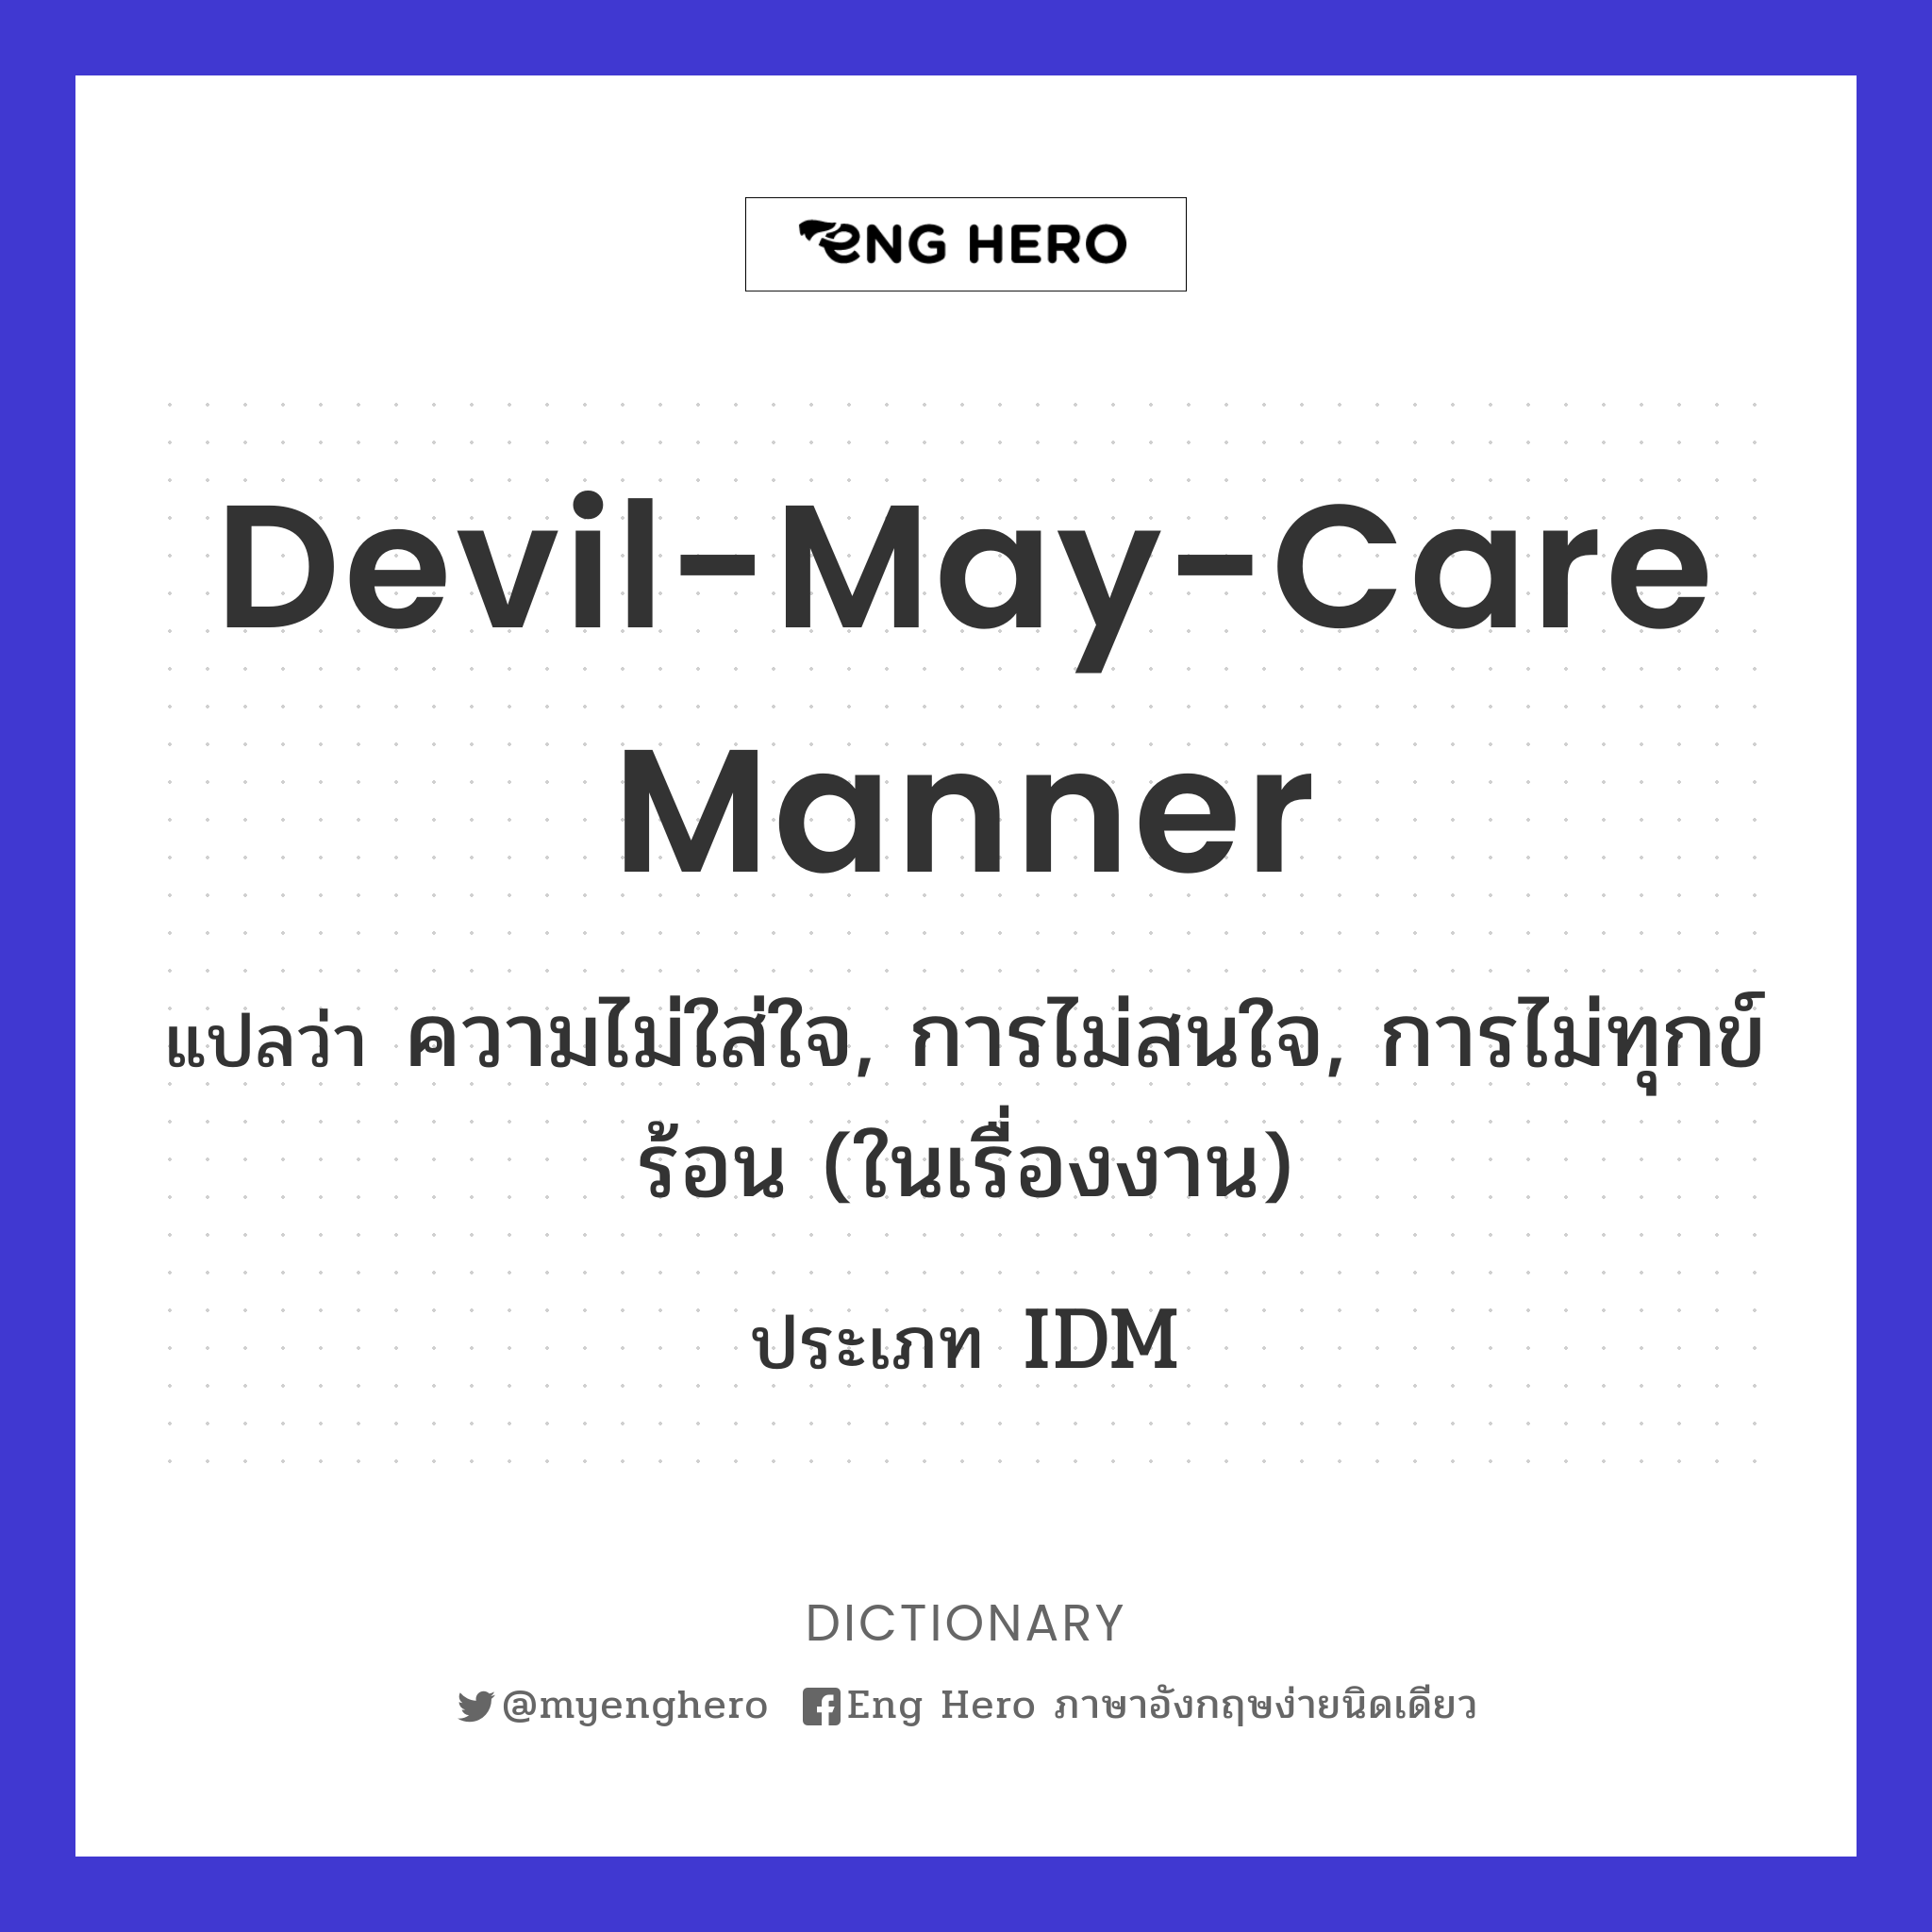 devil-may-care manner